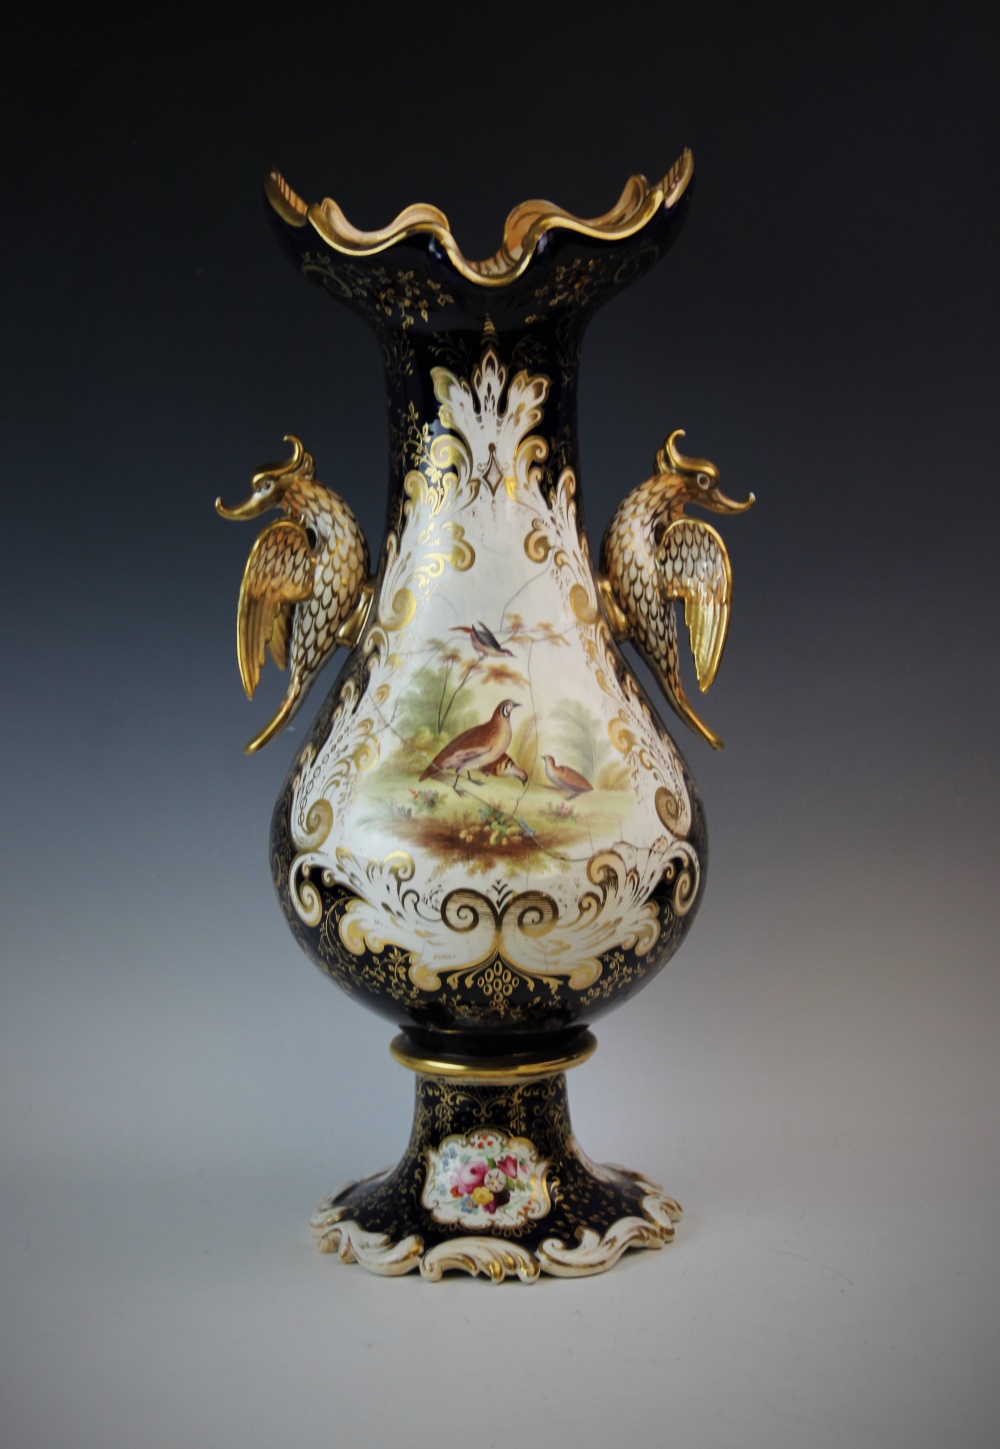 An impressive English porcelain rococo style vase, mid 19th century (probably Coalport), the